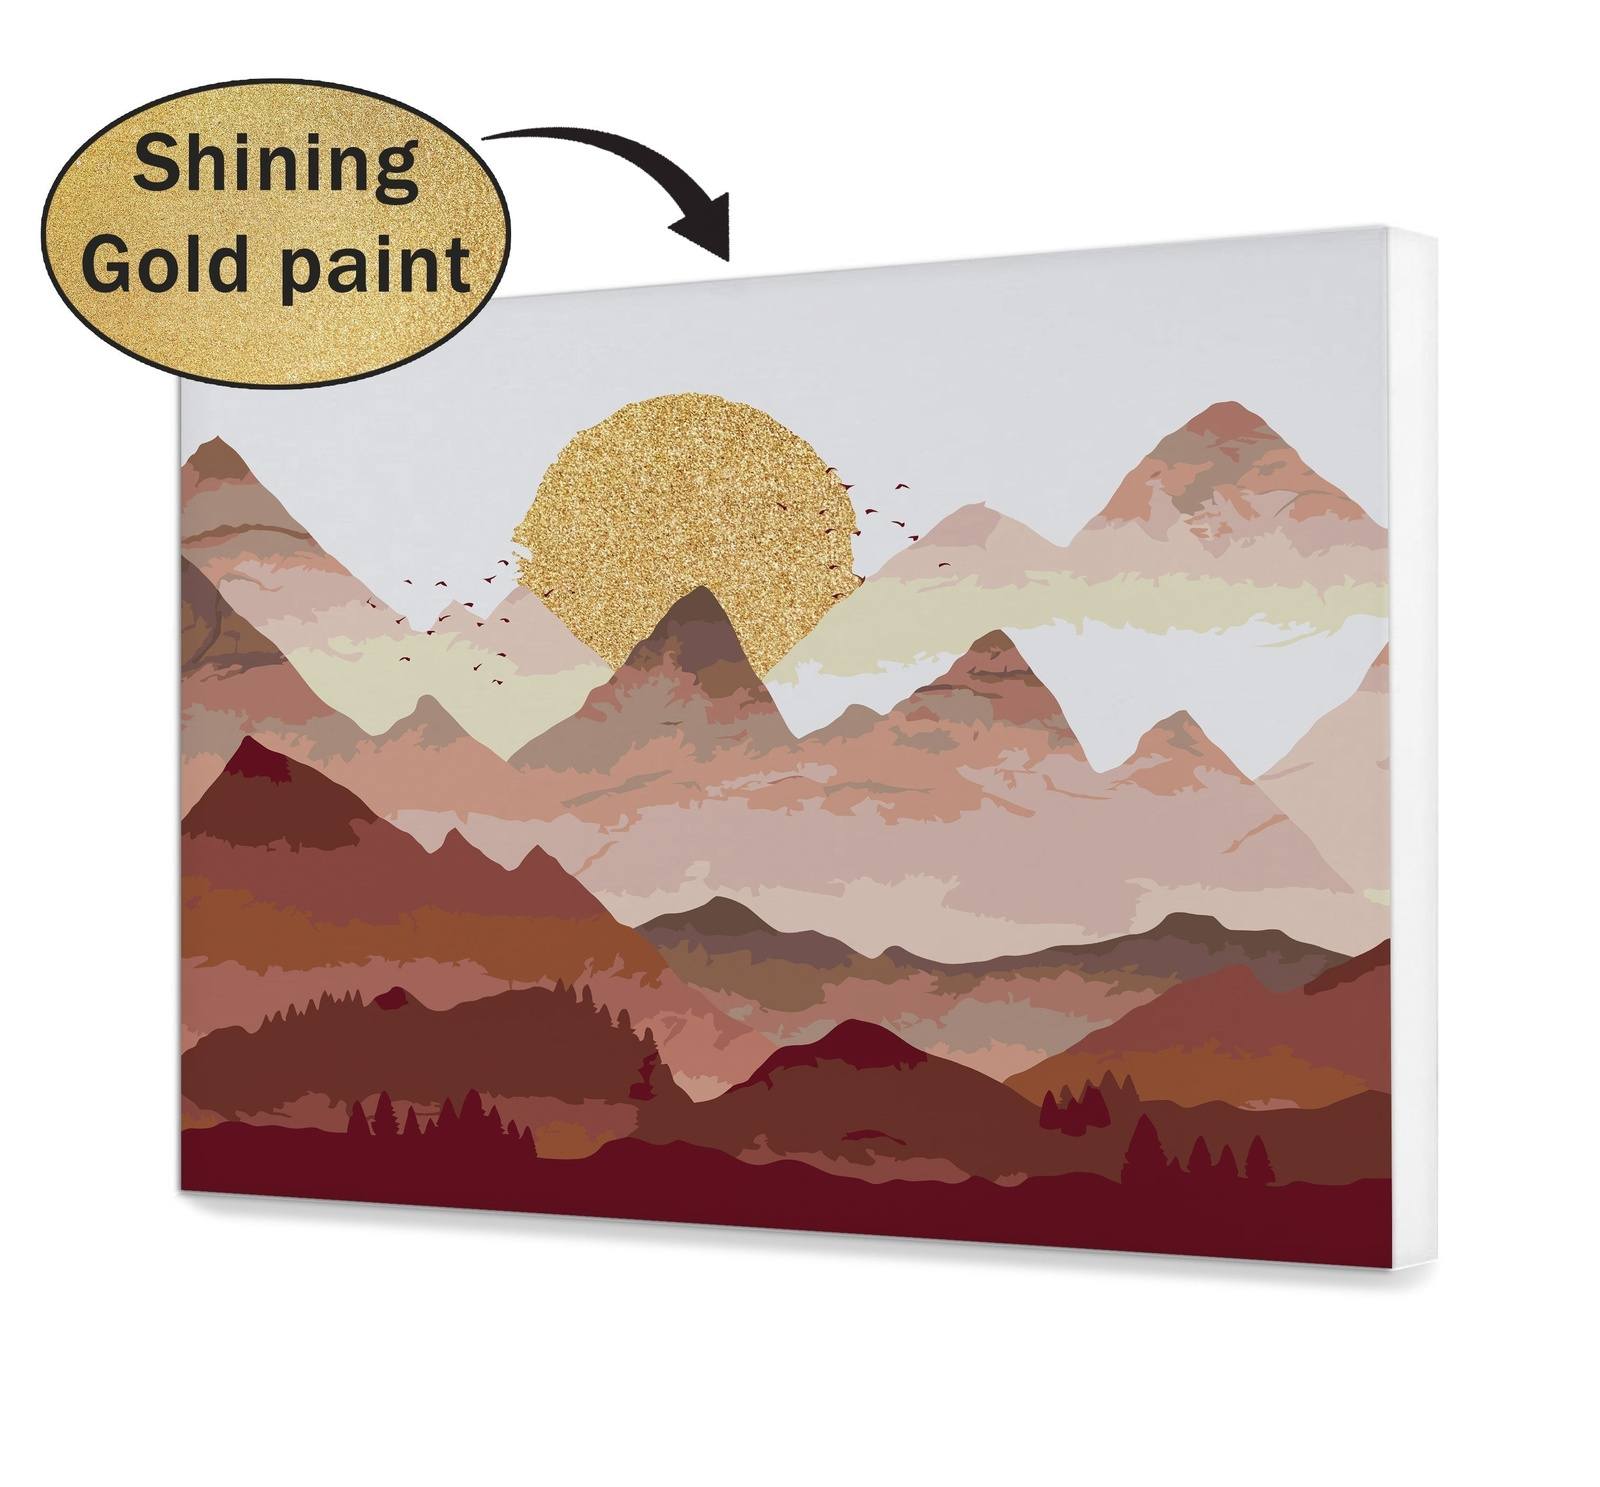 Die goldene Sonne in den Bergen (PC0438)